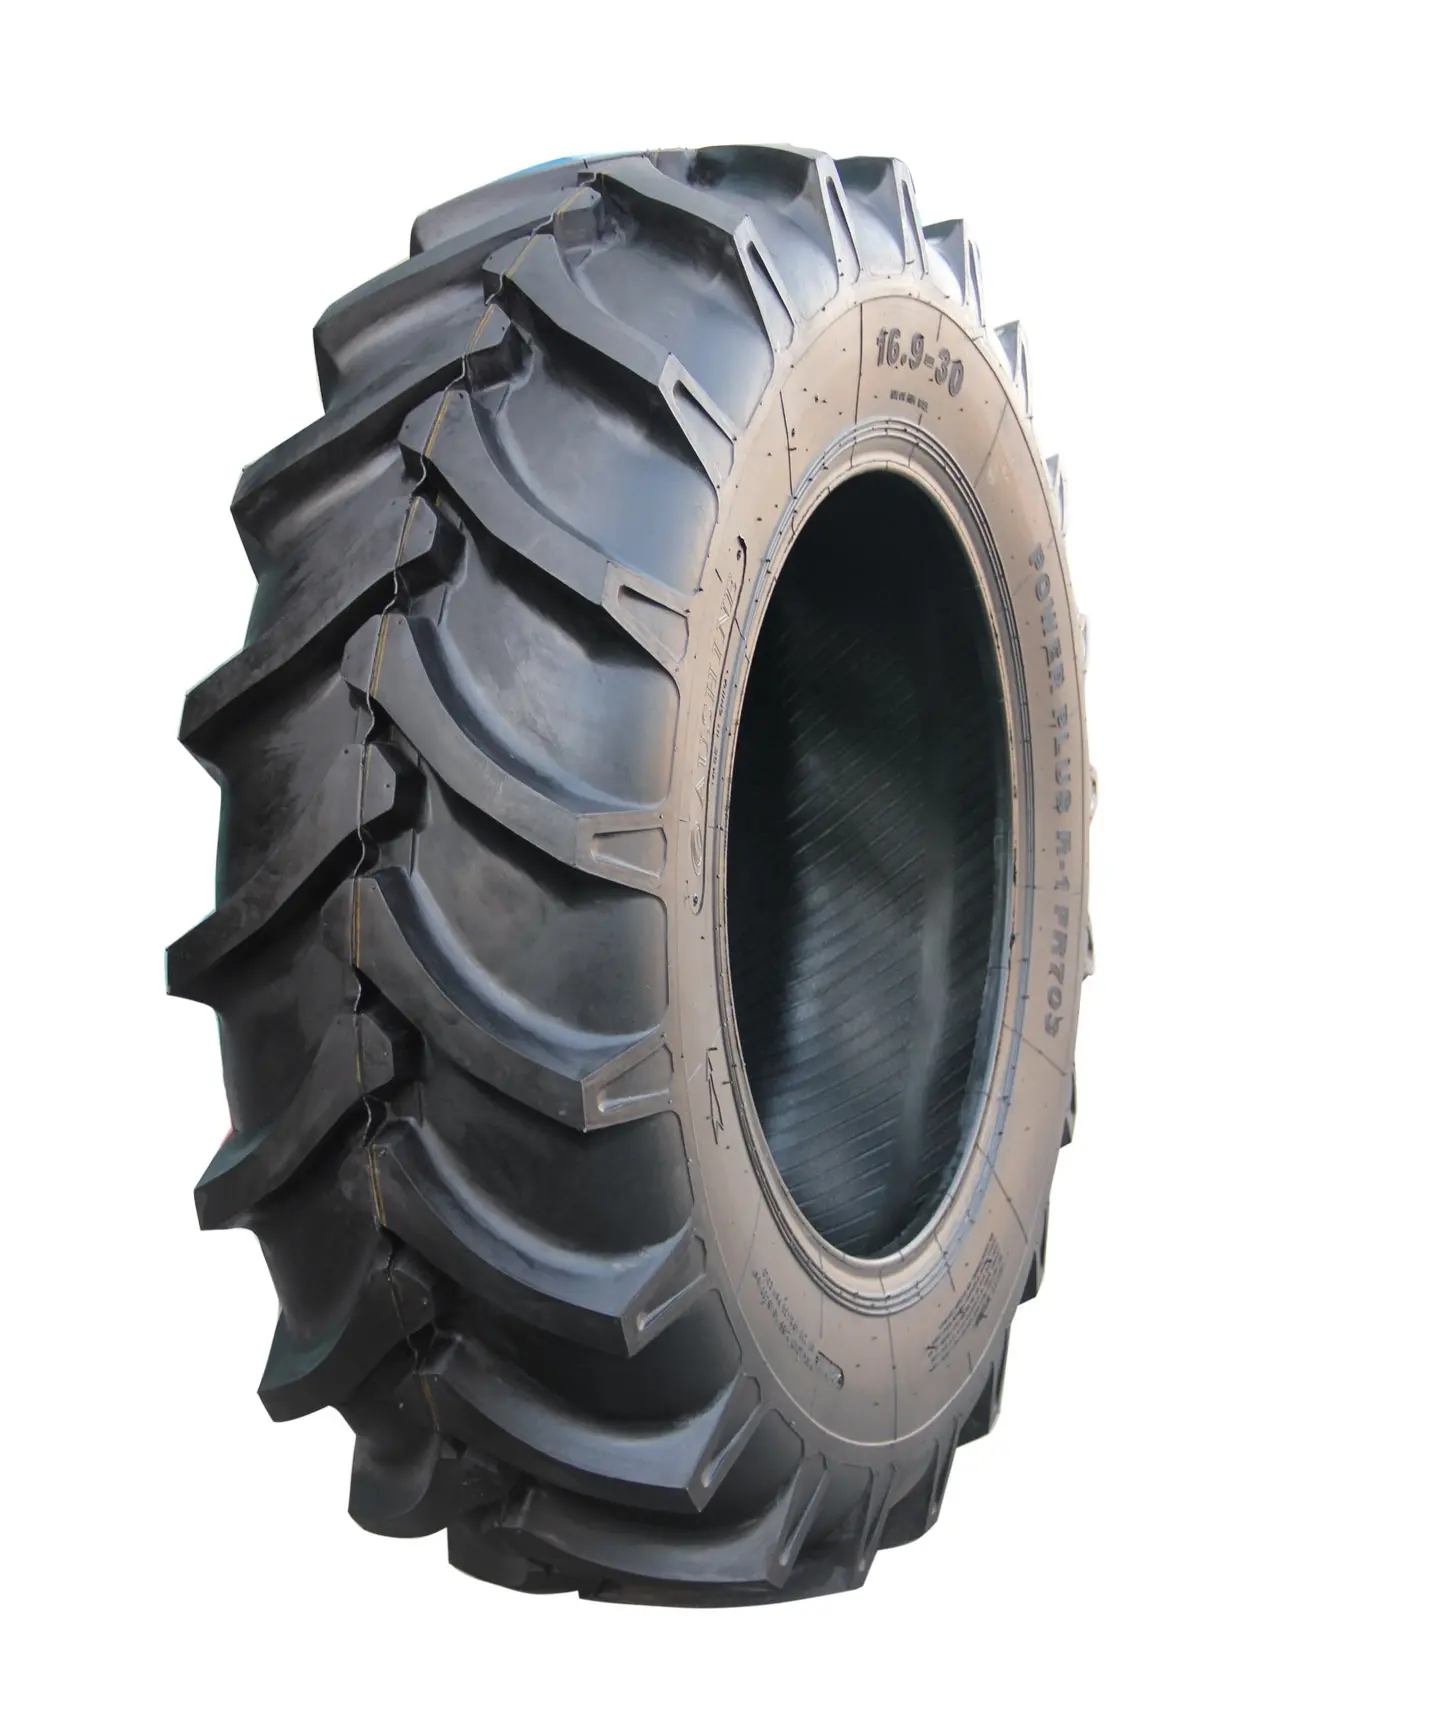 कृषि टायर R1 पूर्वाग्रह एजीआर ट्रैक्टर 16.9-30 के लिए री रिम W15L ट्यूब टायर